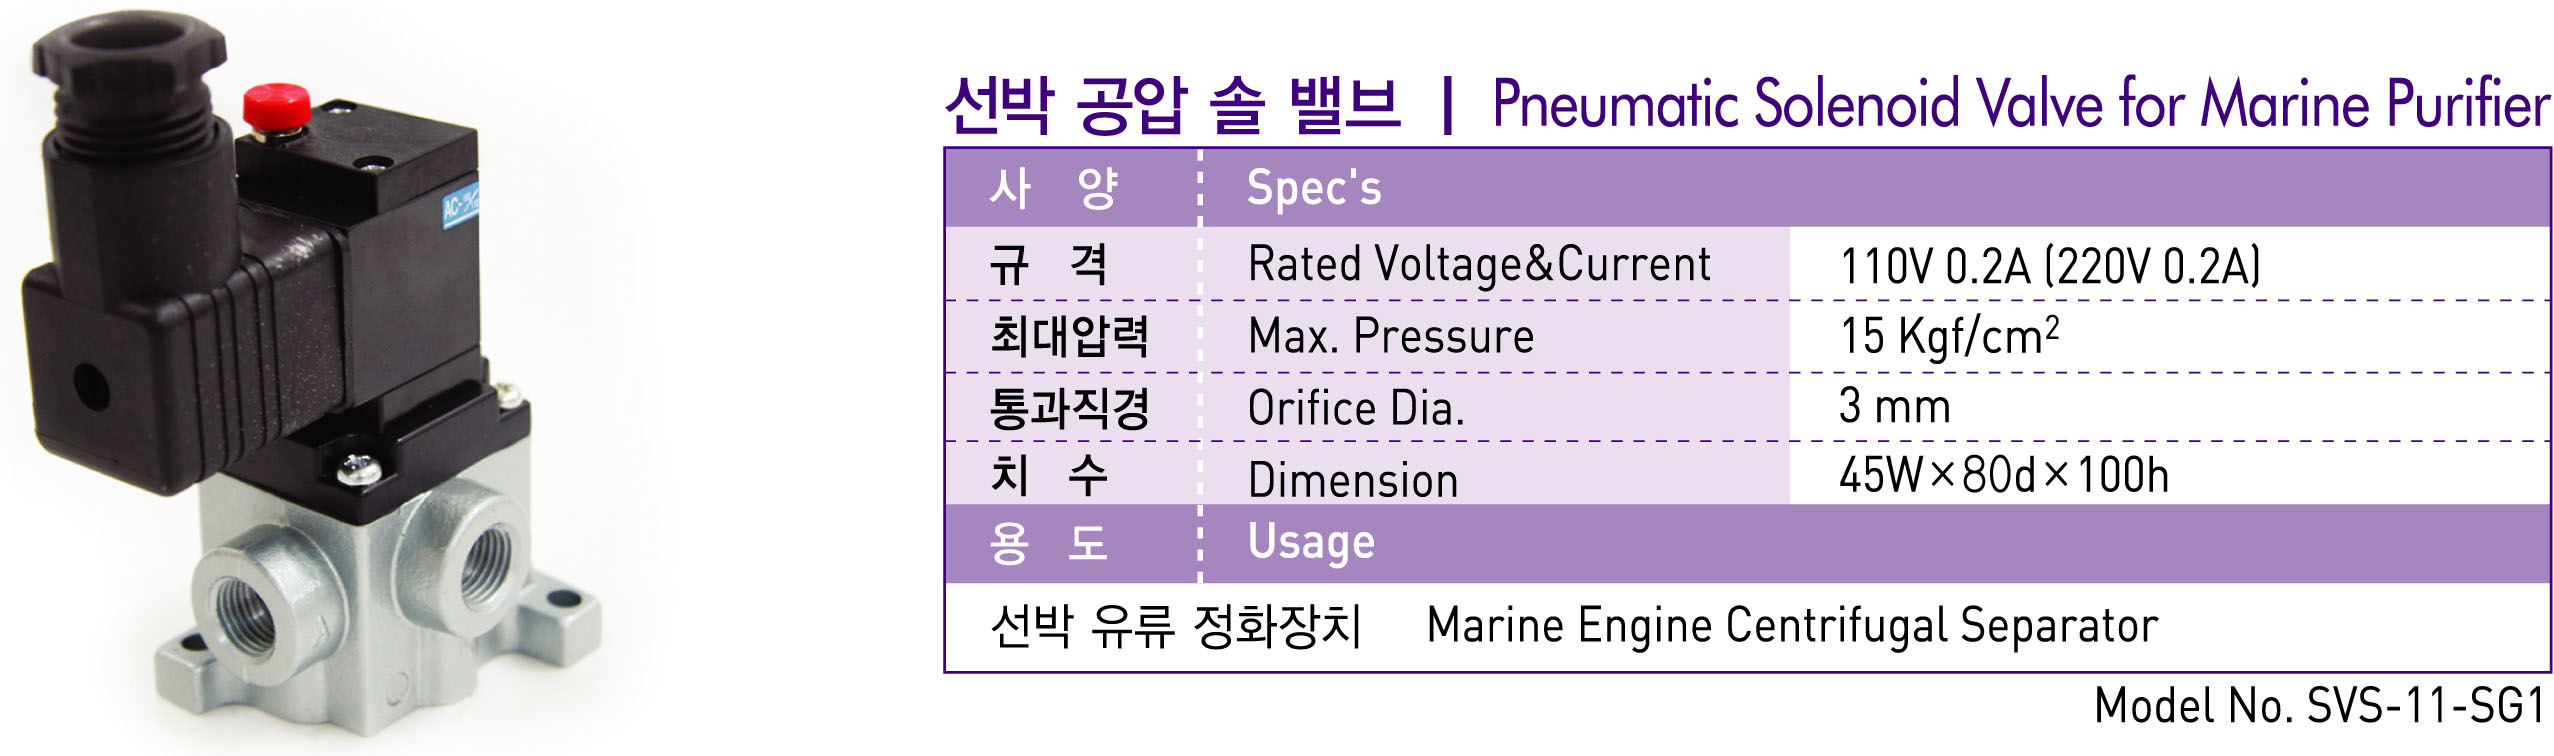 Pneumatic Solenoid Valve for Marine Purifier